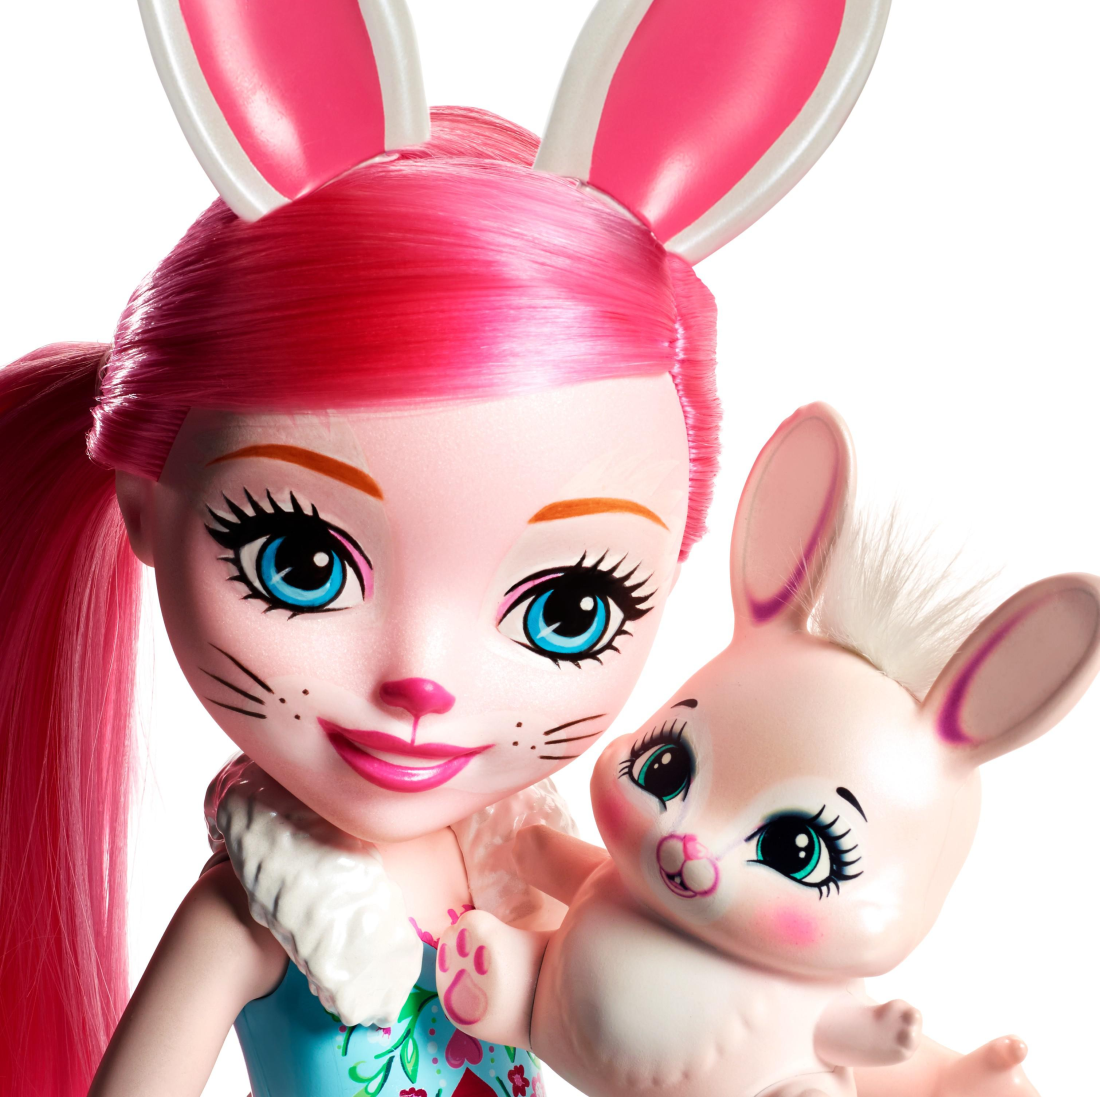 Enchantimals Κούκλα - Bree Bunny & Twist